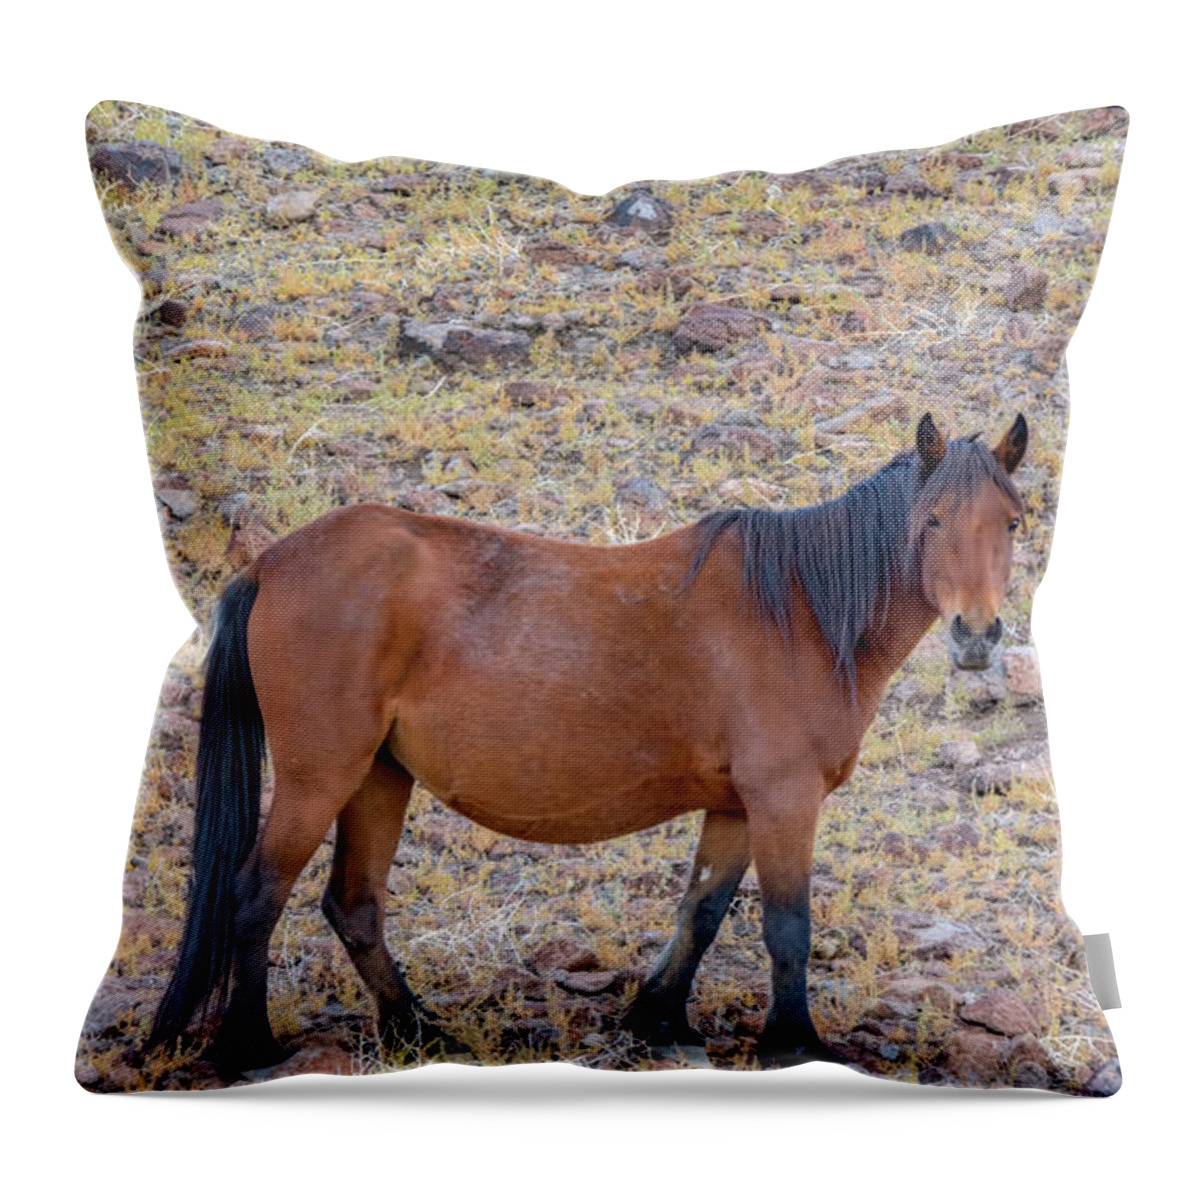 Mustang Throw Pillow featuring the photograph Wild Mustang #1 by LeeAnn McLaneGoetz McLaneGoetzStudioLLCcom